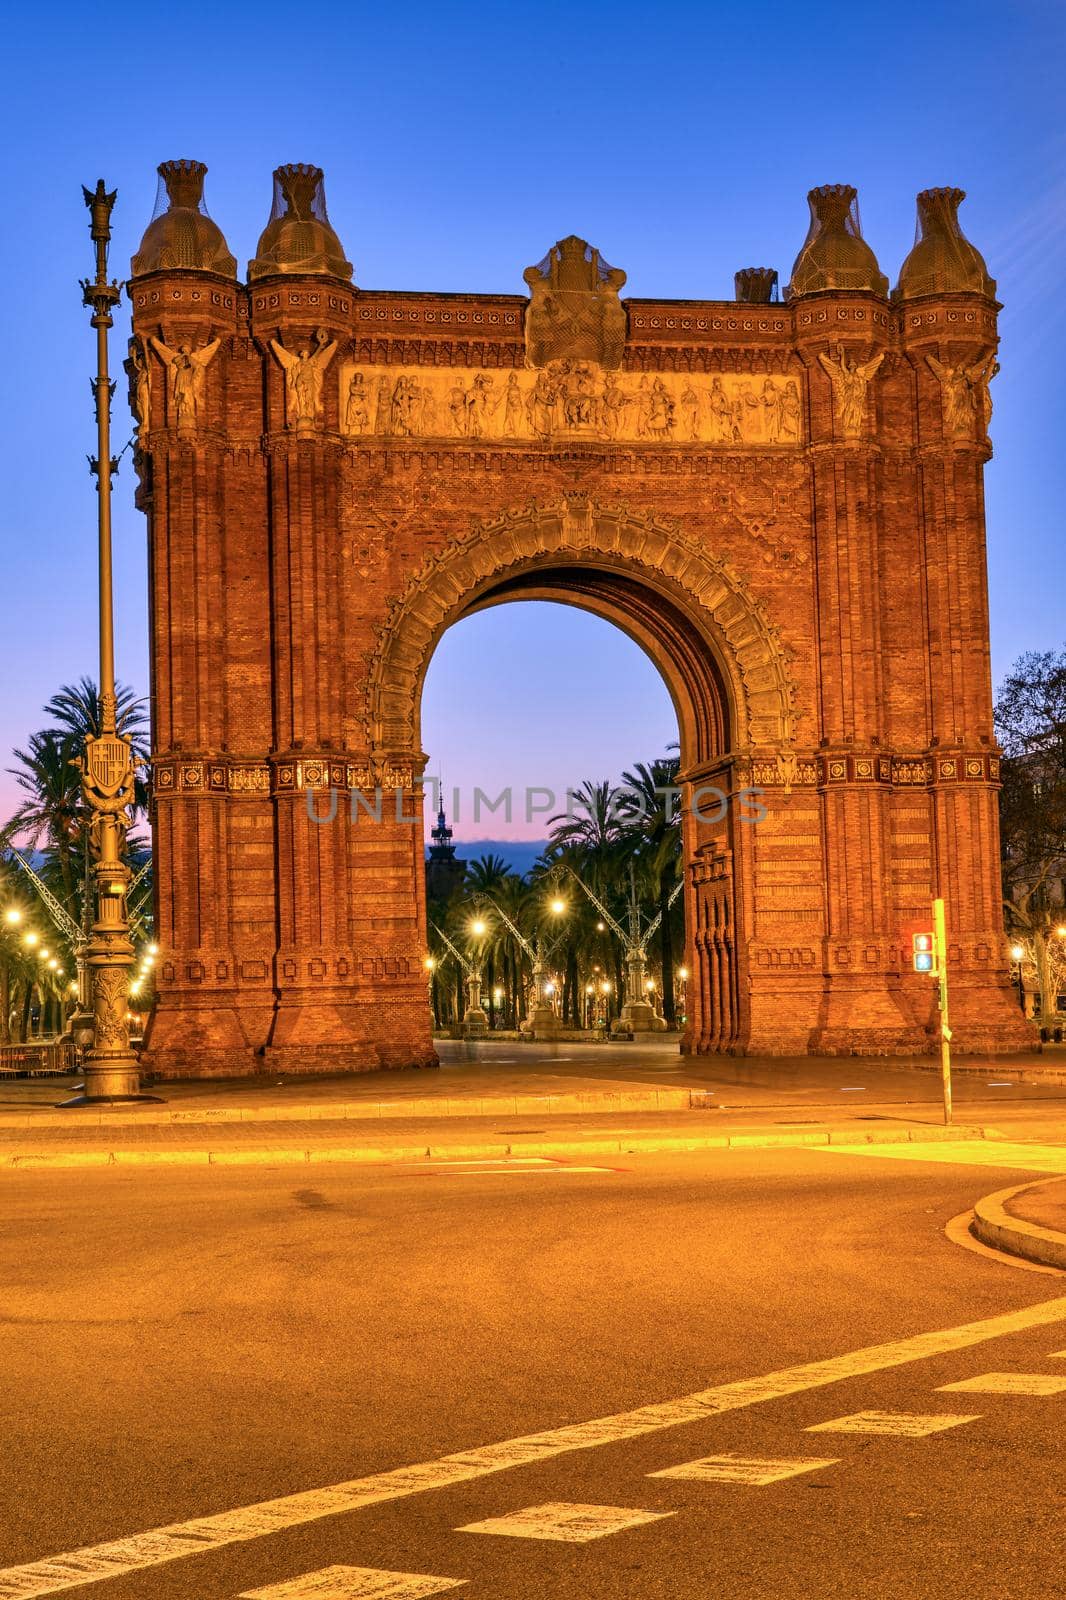 The Arc de Triomf in Barcelona by elxeneize